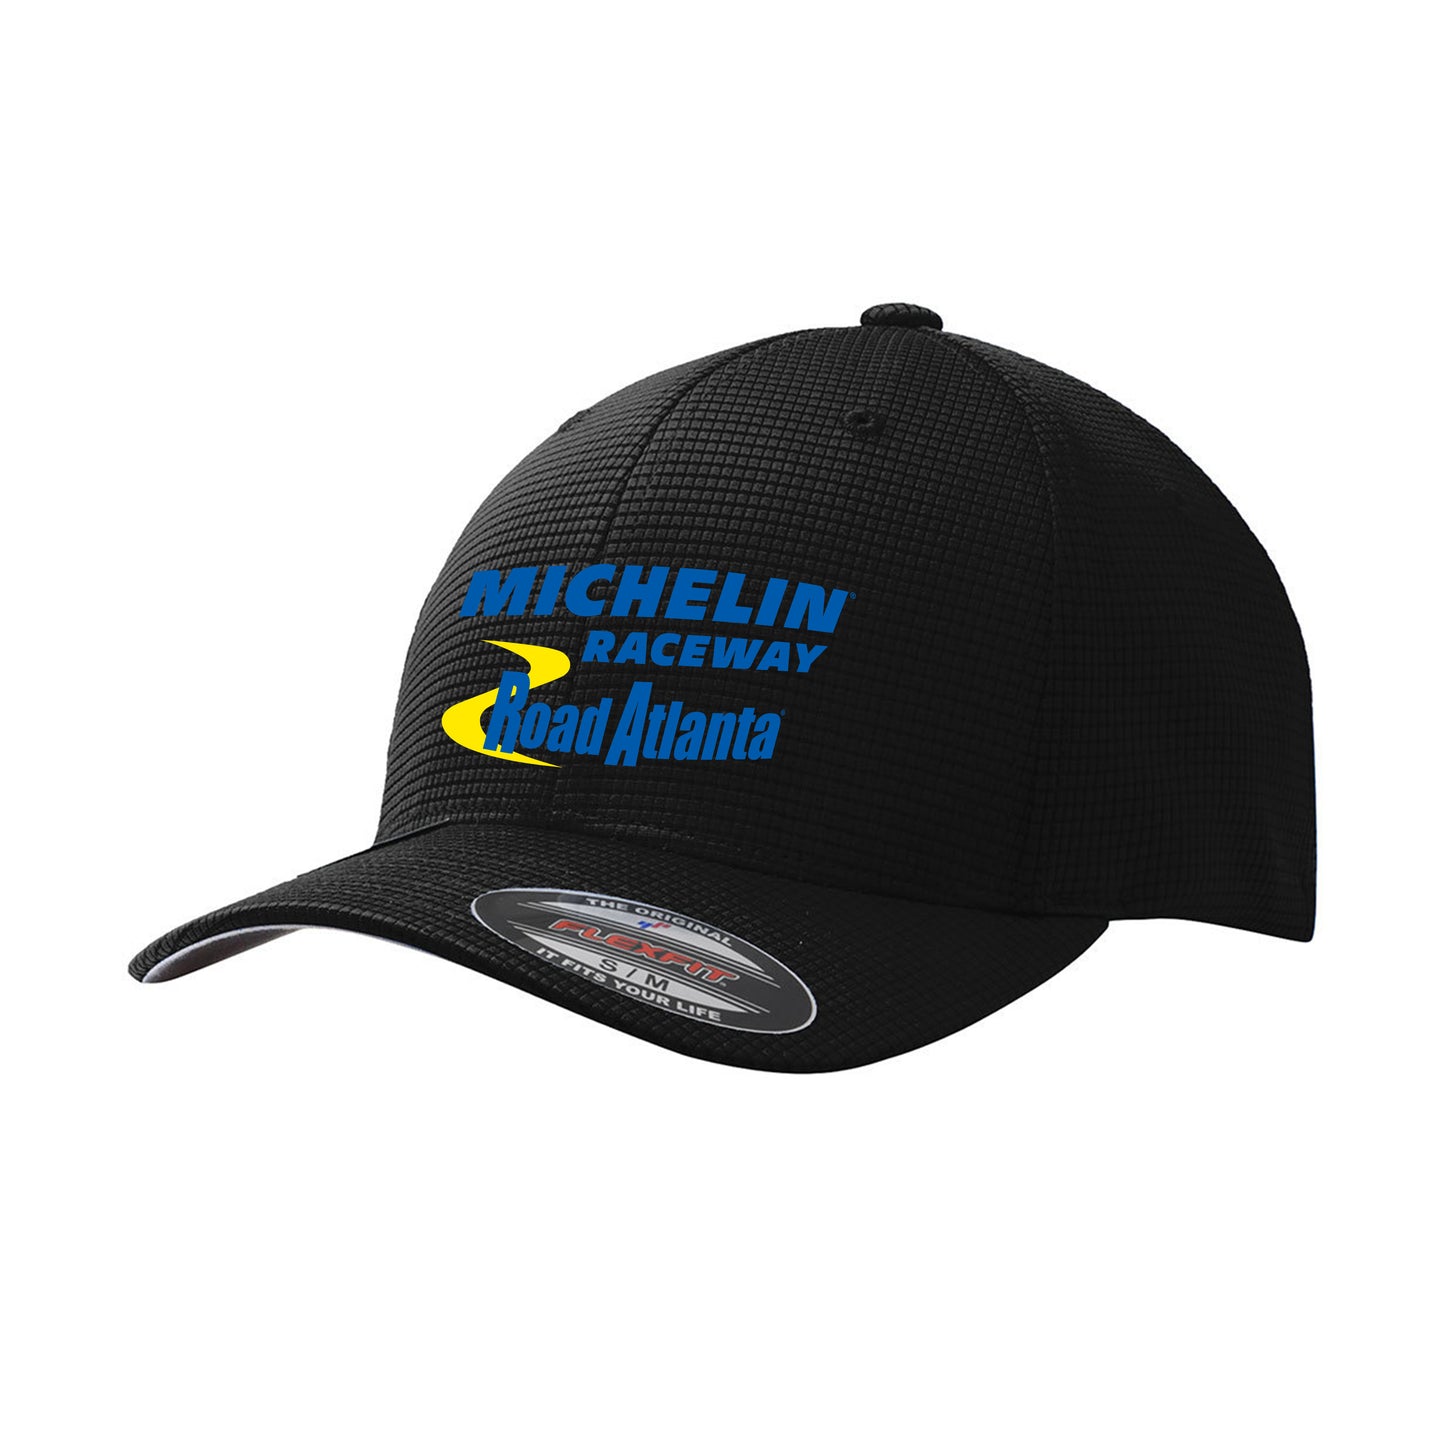 Michelin Raceway Road Atlanta Flexfit Hat - Black